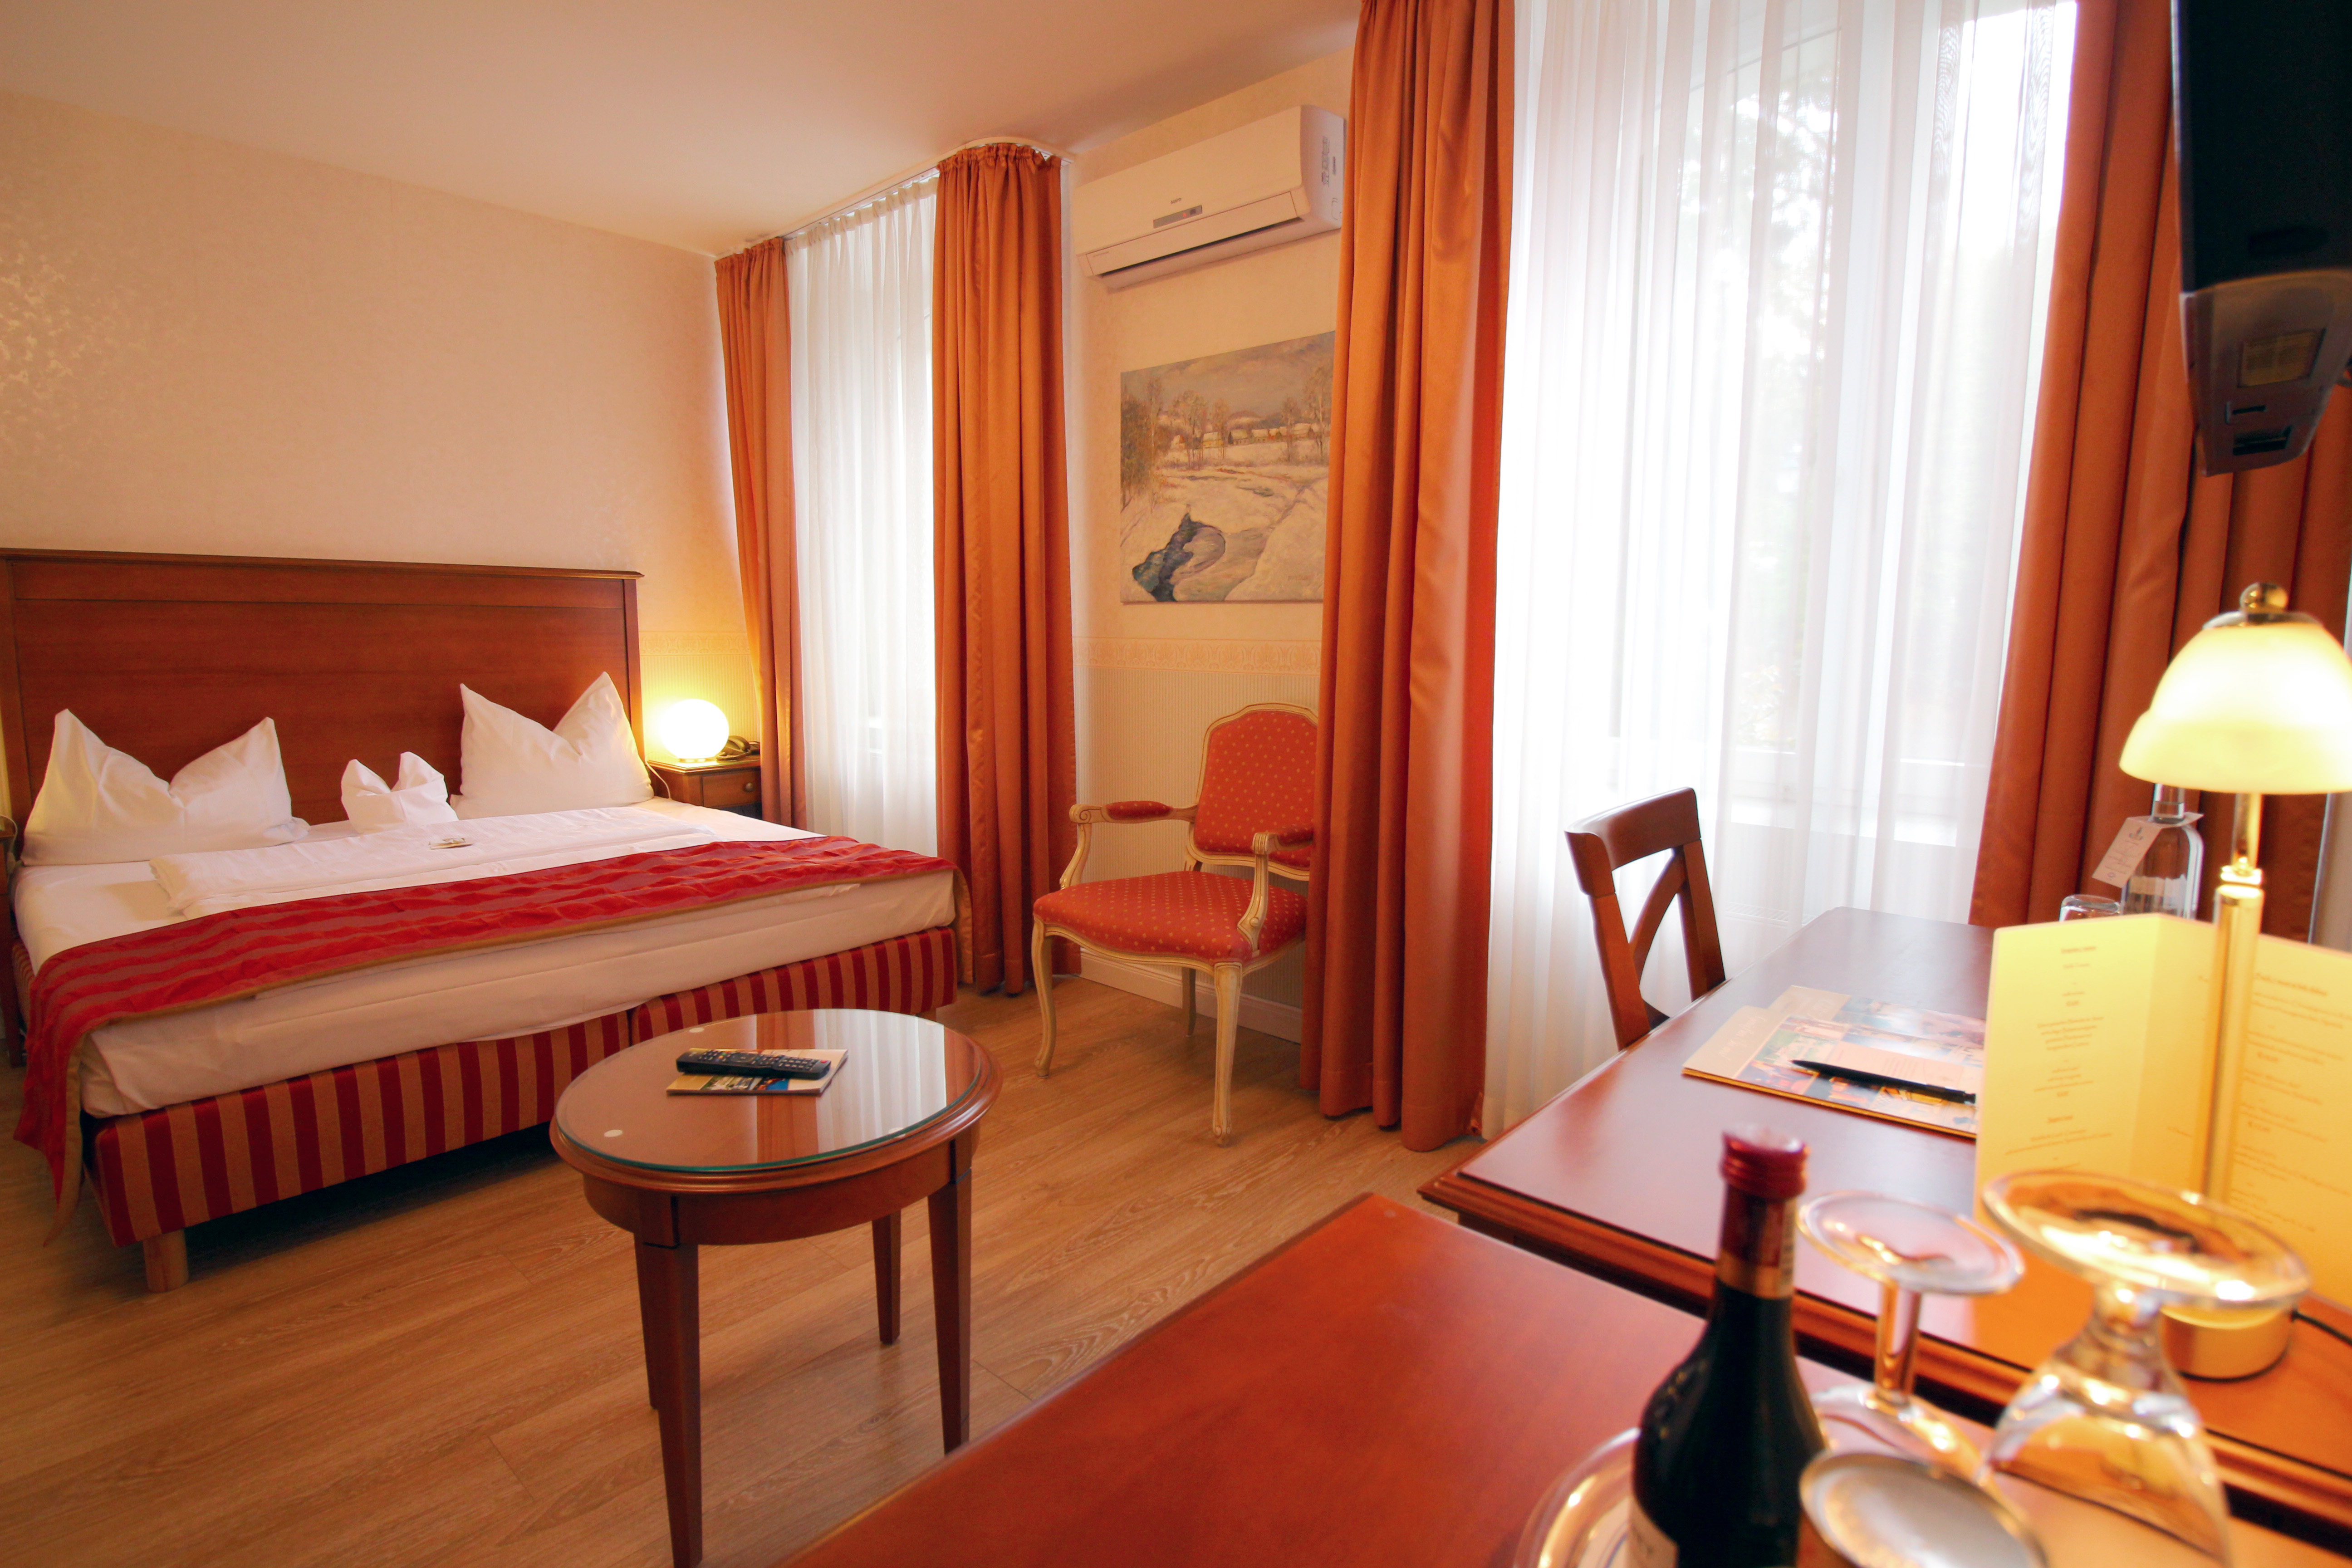 Hotel Am Mühlenteich <br/>99.00 ew <br/> <a href='http://vakantieoplossing.nl/outpage/?id=52a0888d167b4e9fdfdbb0eac47b3f41' target='_blank'>View Details</a>